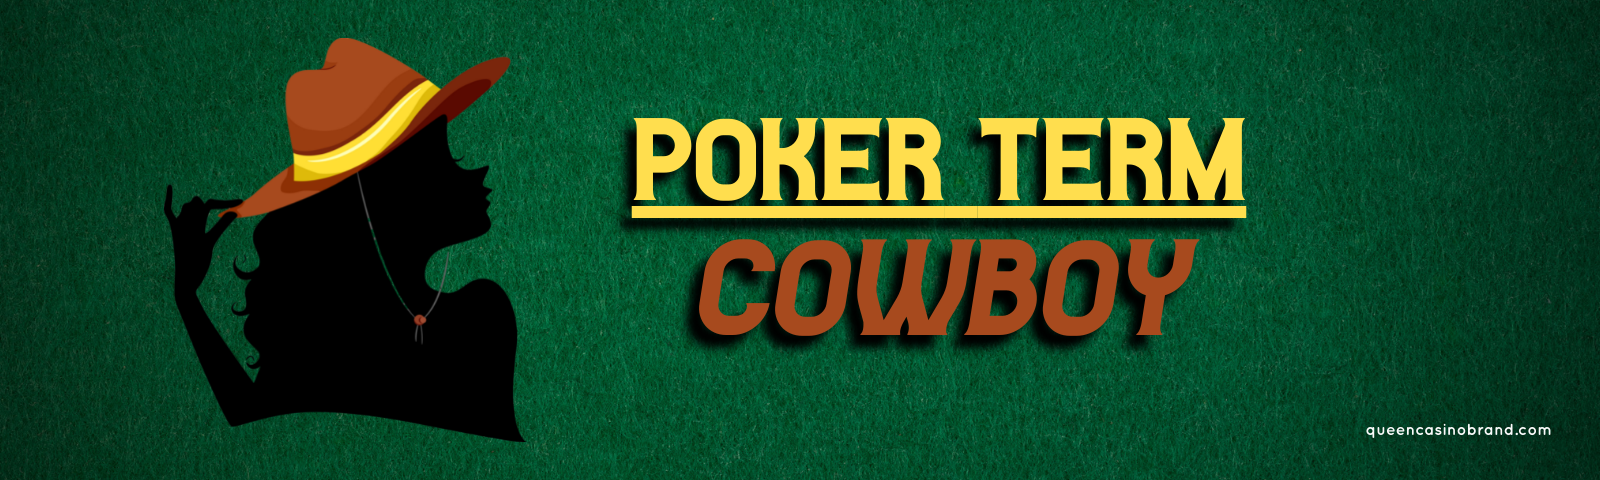 Poker Term Cowboy | Queen Casino Brand